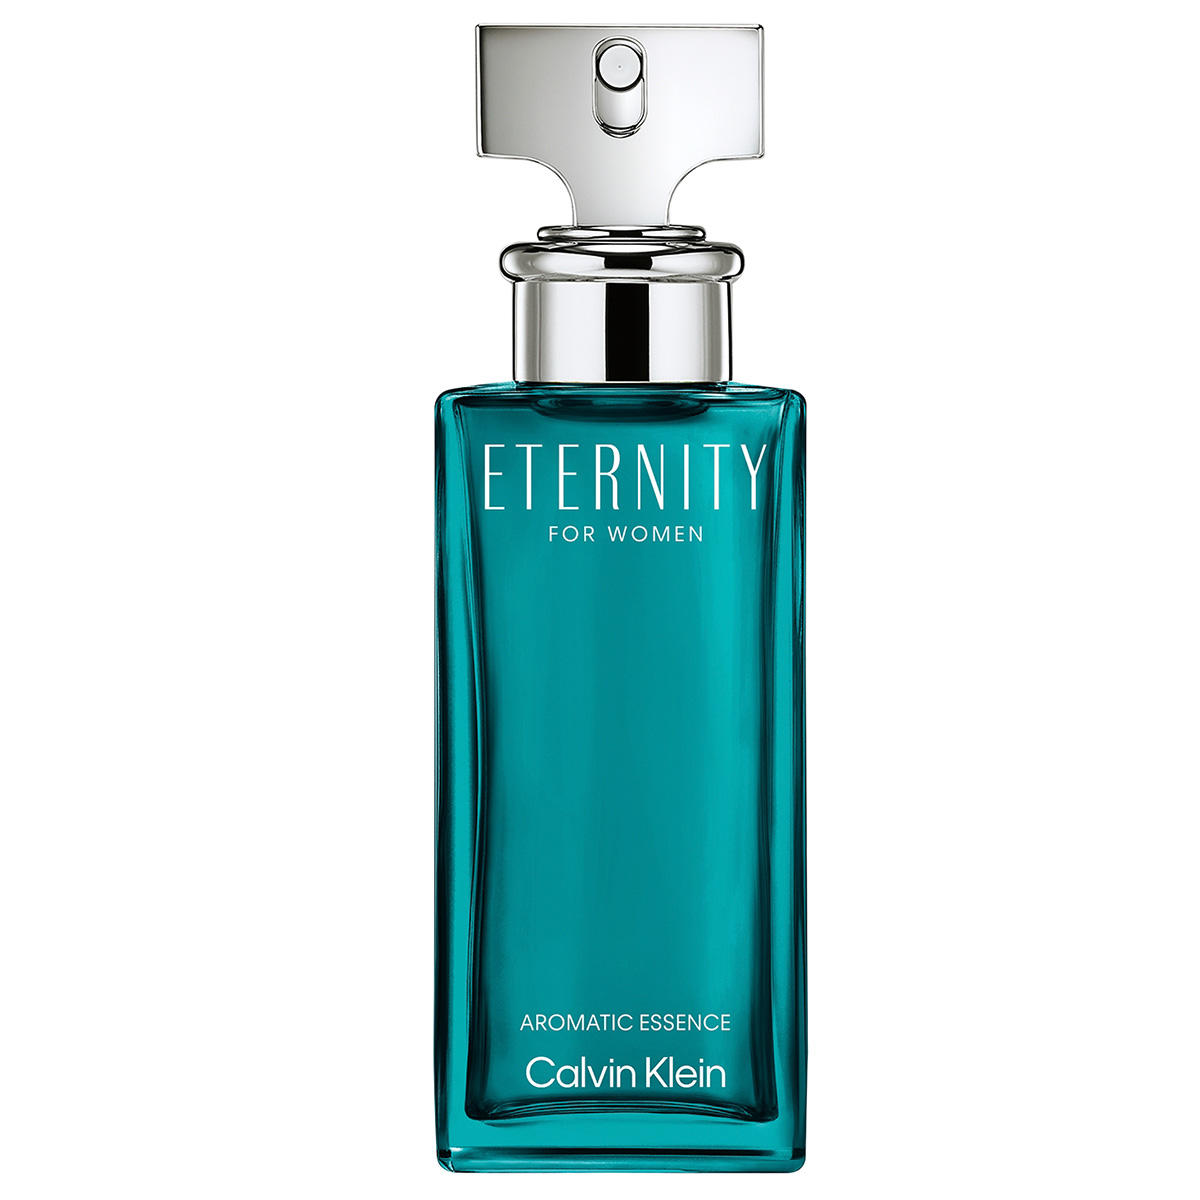 Calvin Klein Eternity For Women Aromatic Essence  - 1